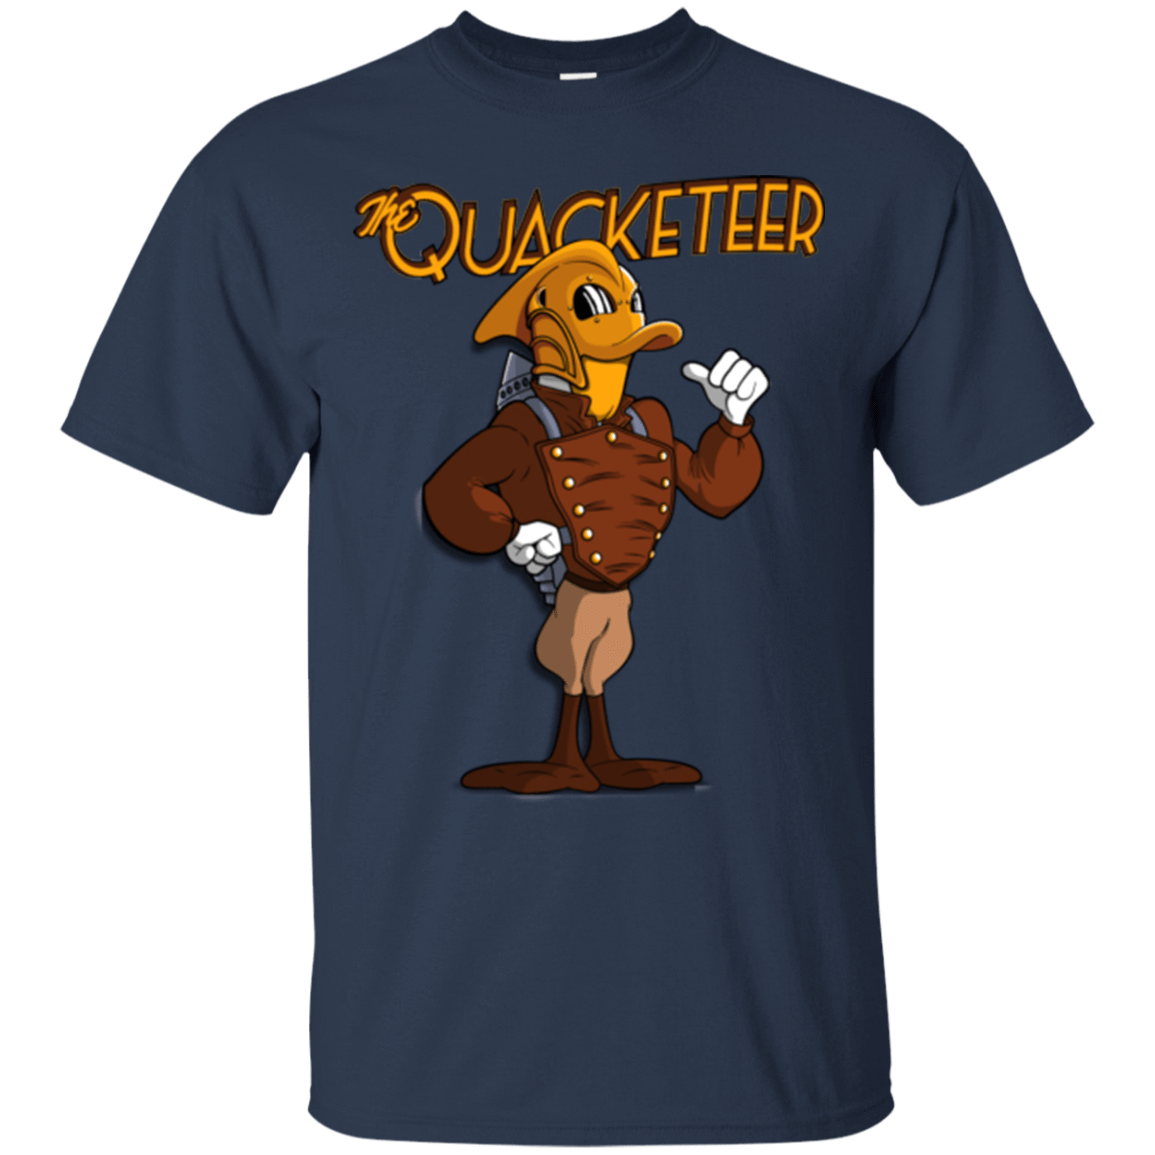 T-Shirts Navy / Small The Quacketeer T-Shirt